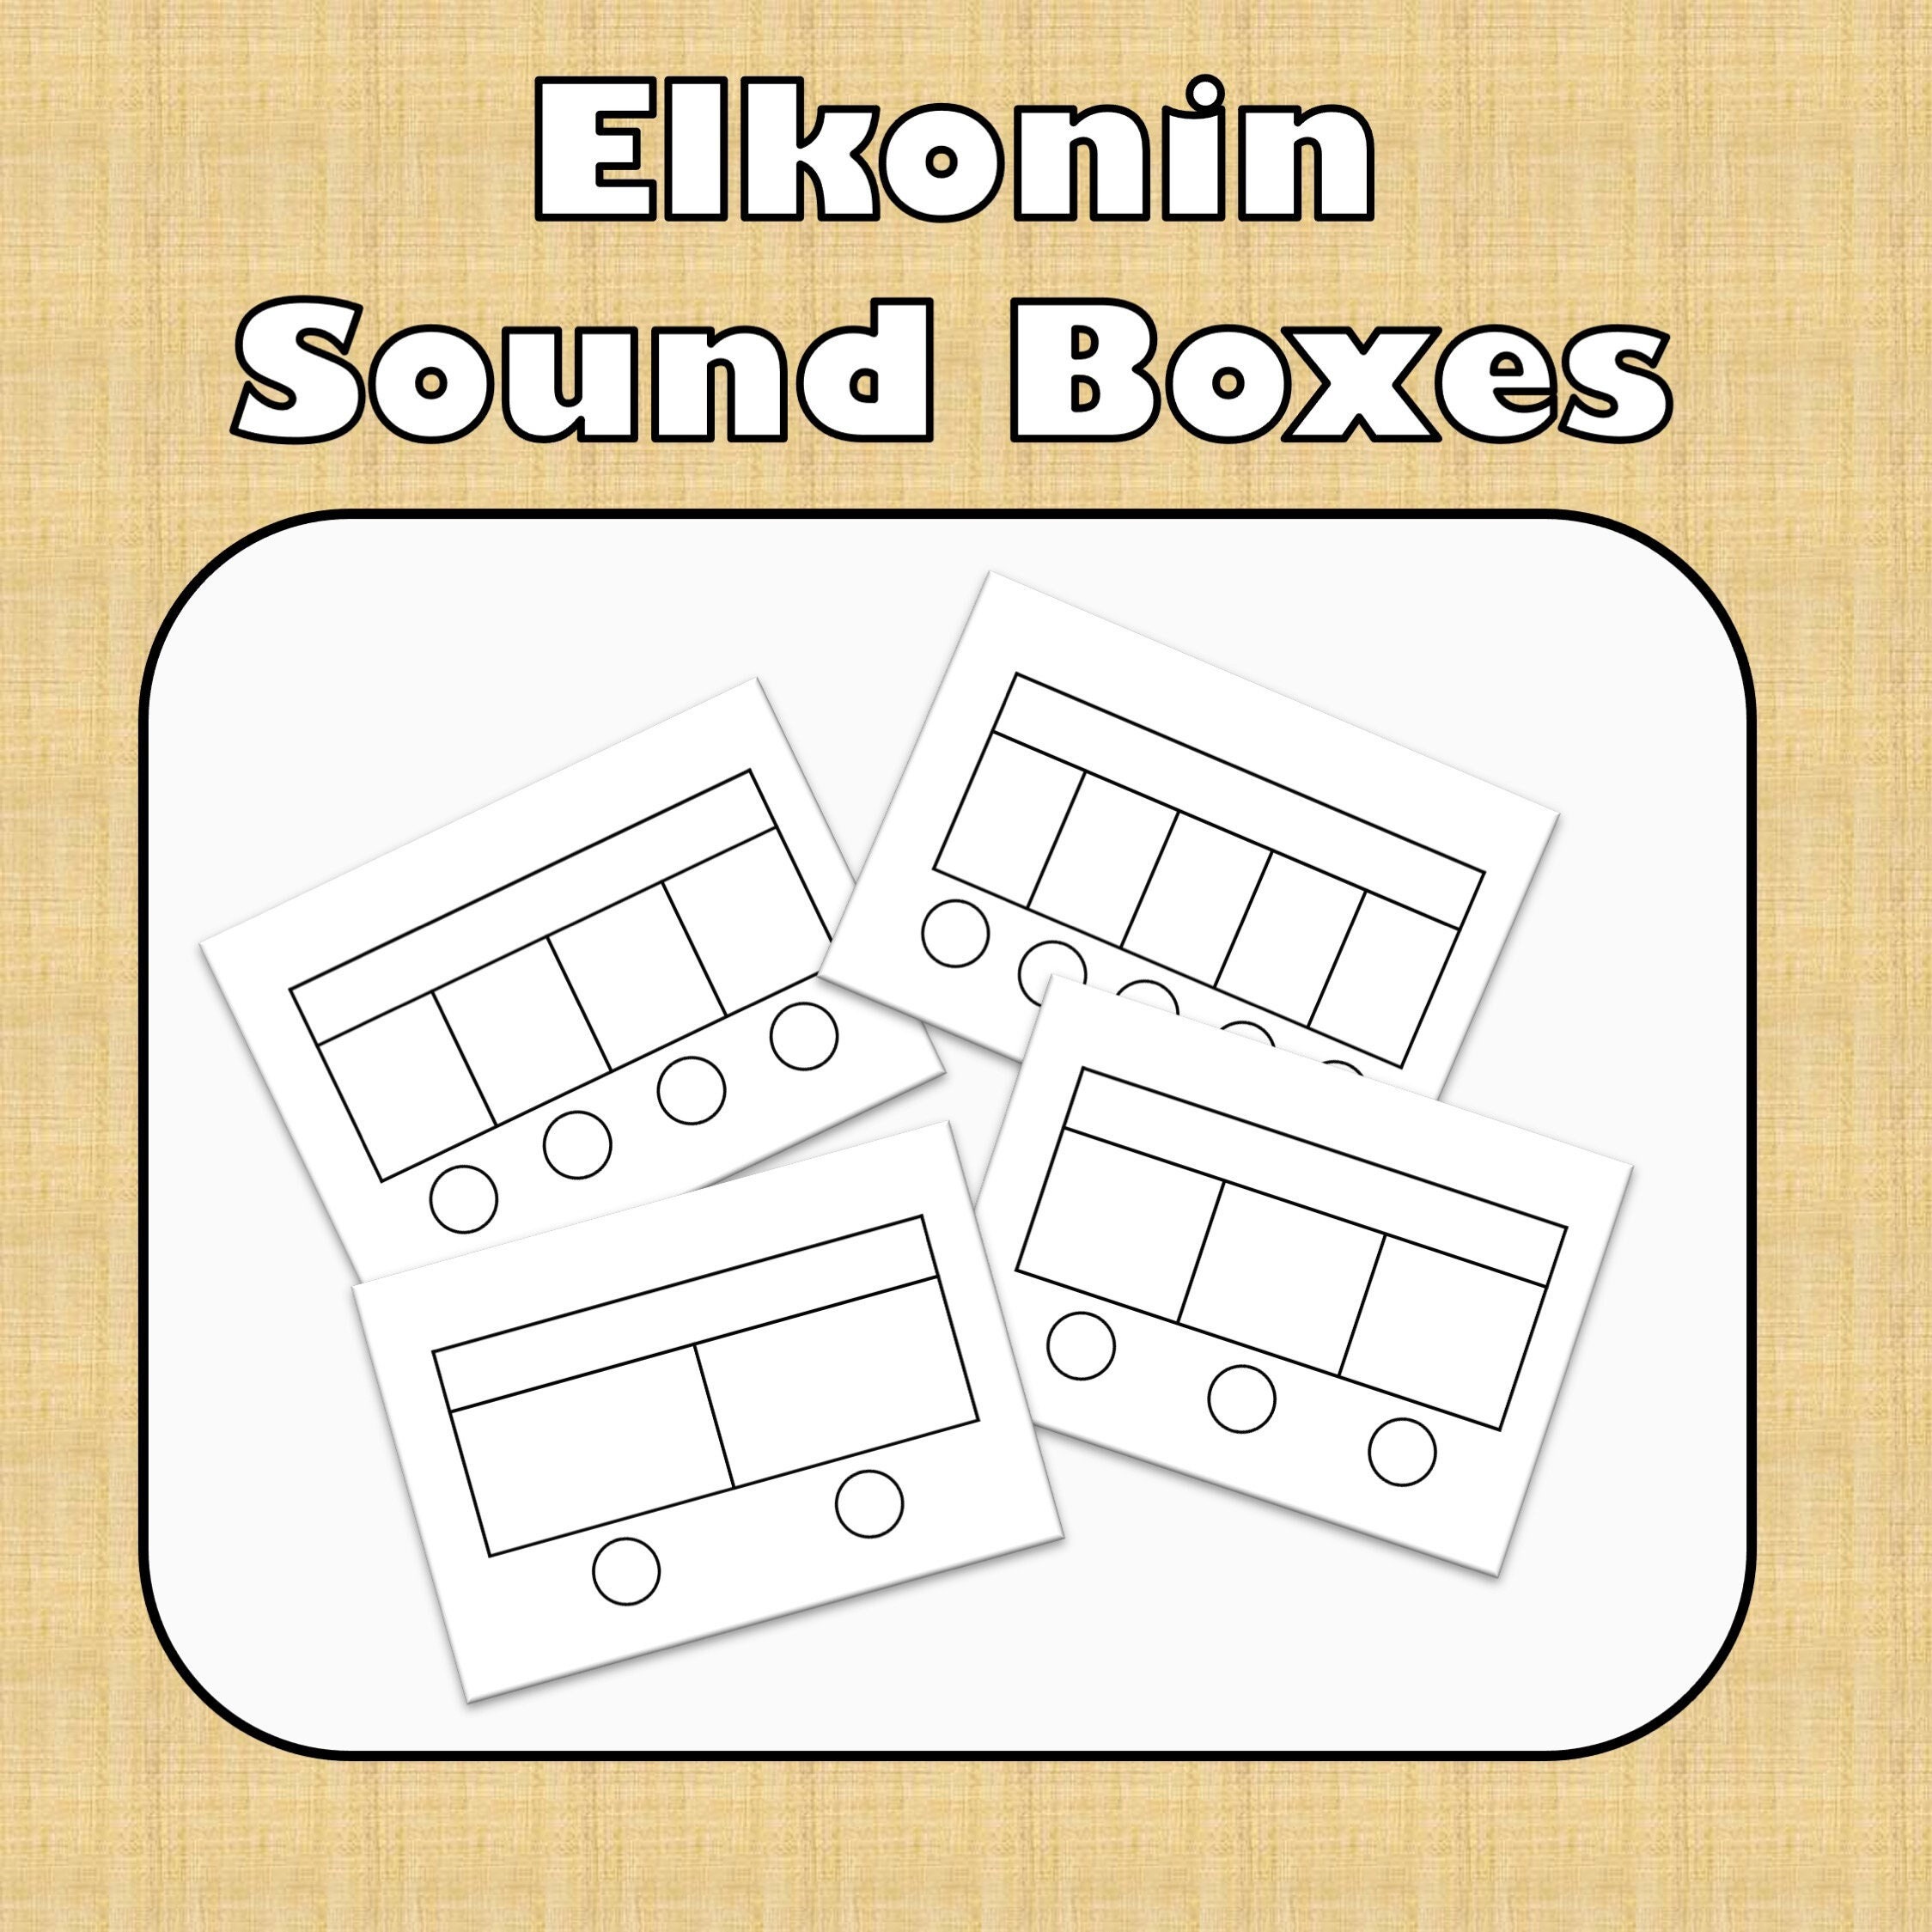 sound-elkonin-boxes-blank-word-work-cvc-phonemic-awareness-etsy